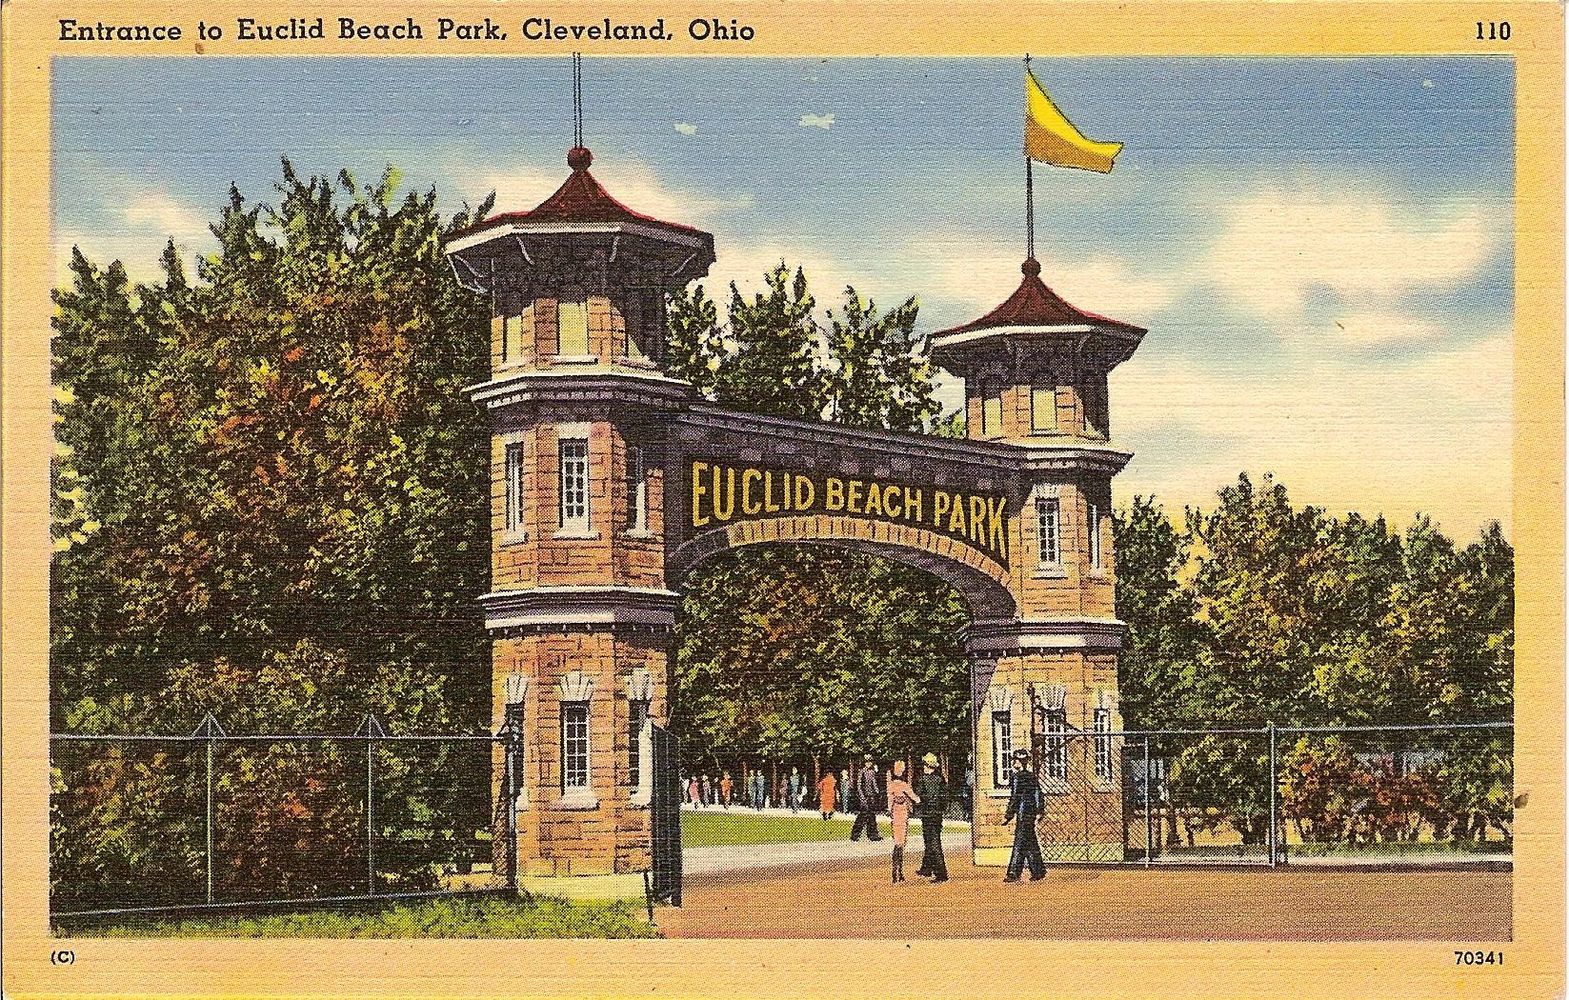 Image from an old Euclid Beach Park postcard.
